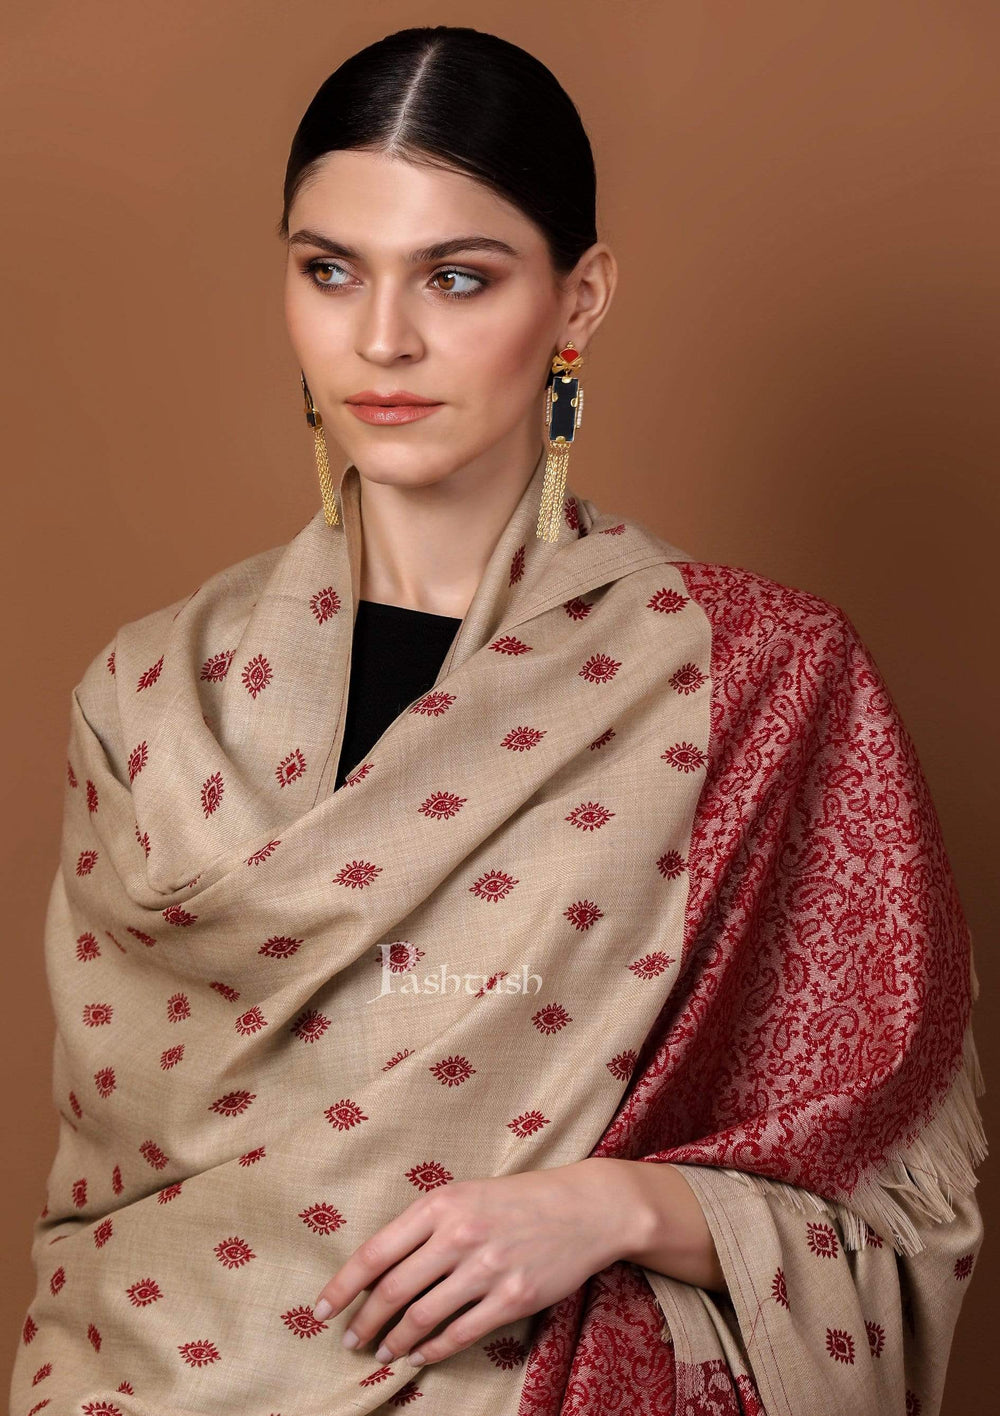 Pashtush India 100x200 Pashtush Womens Embroidery Shawl, Light Weight and Warm, Beige and Merlot